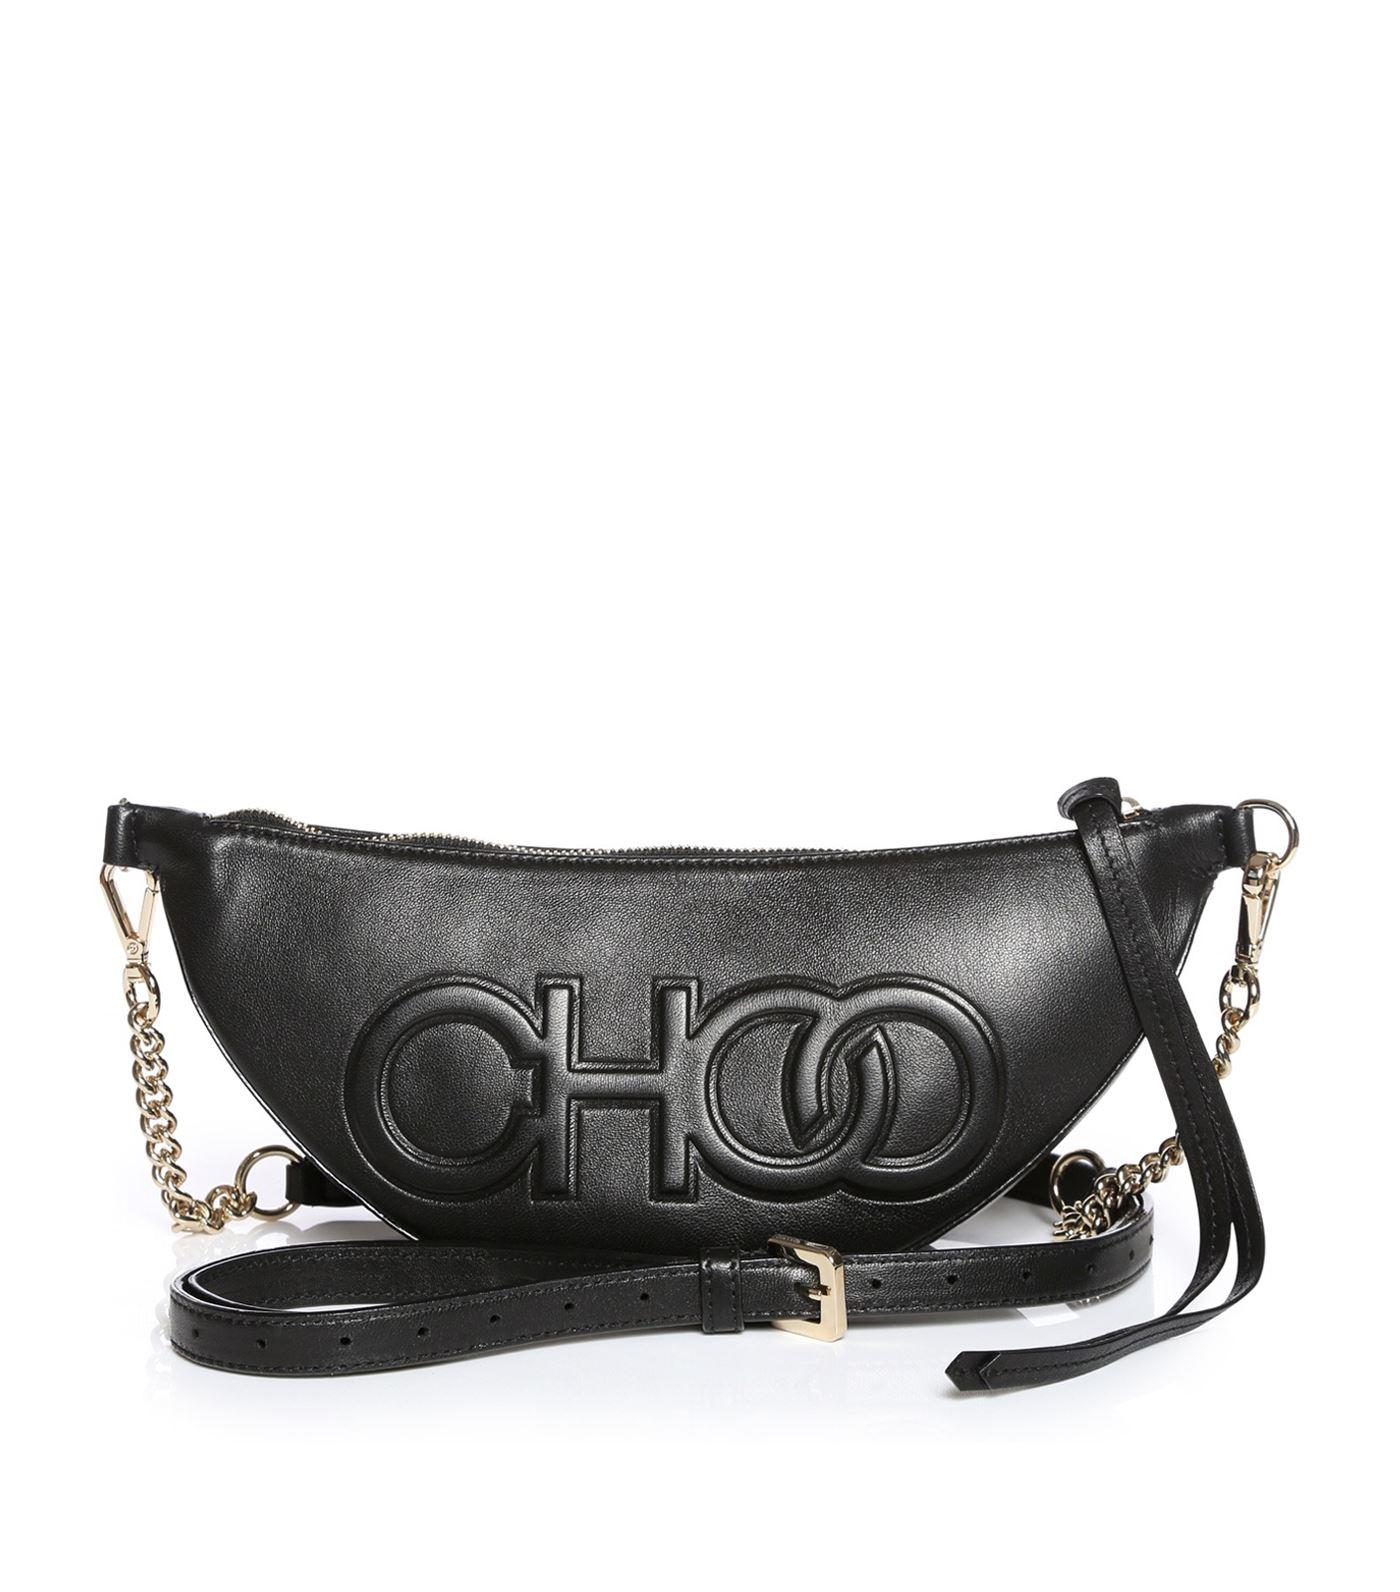 Jimmy Choo Leather Faye Belt Bag in Black - Save 10% - Lyst